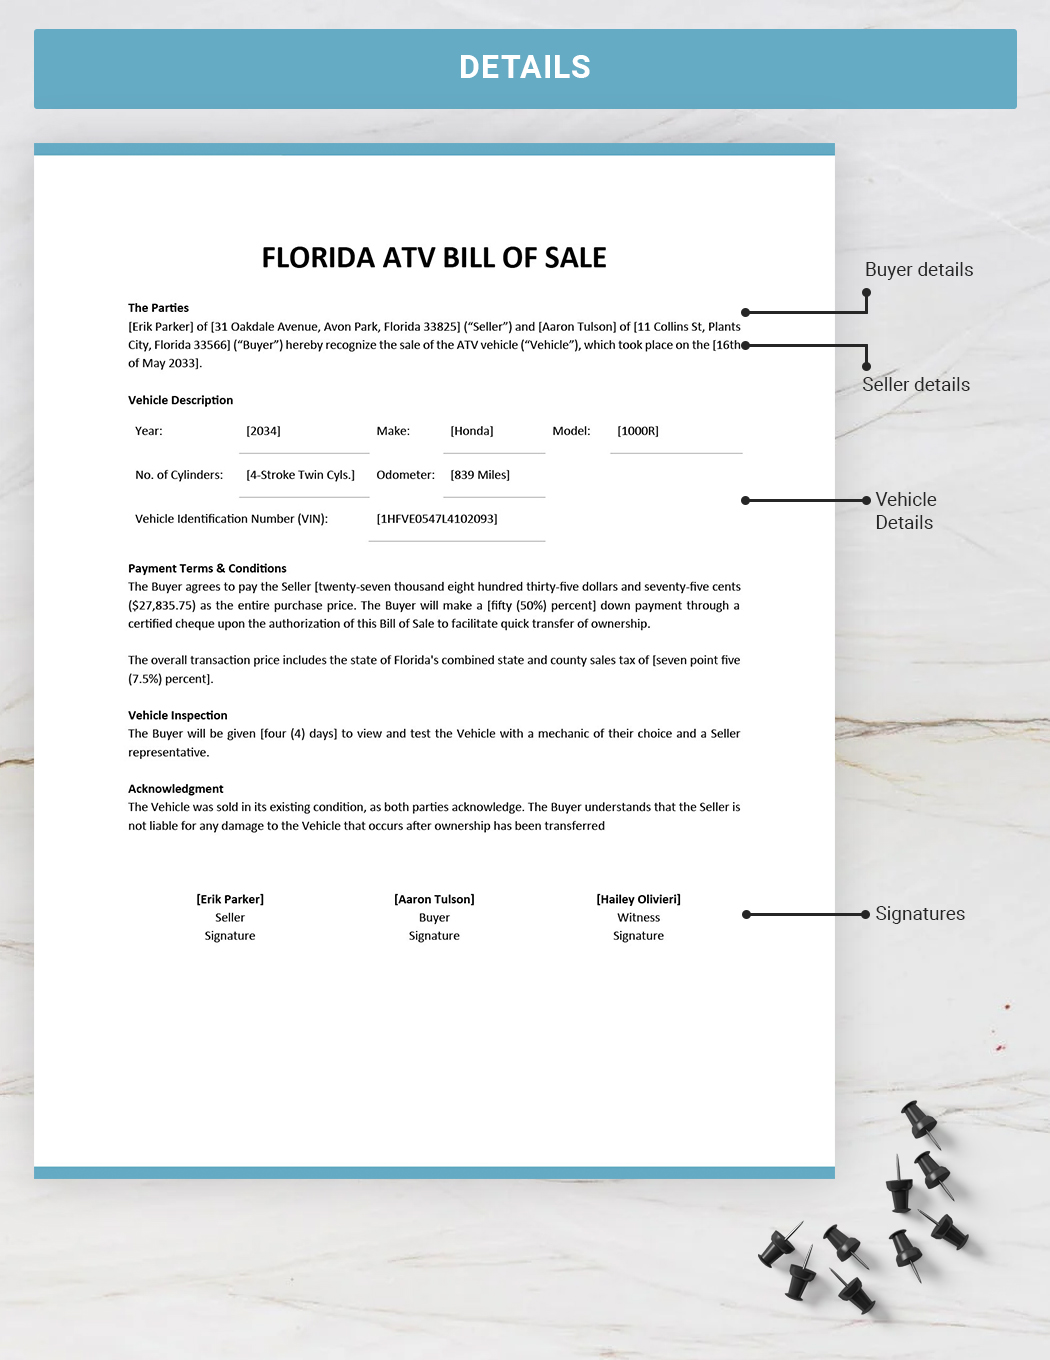 Florida ATV Bill of Sale Template